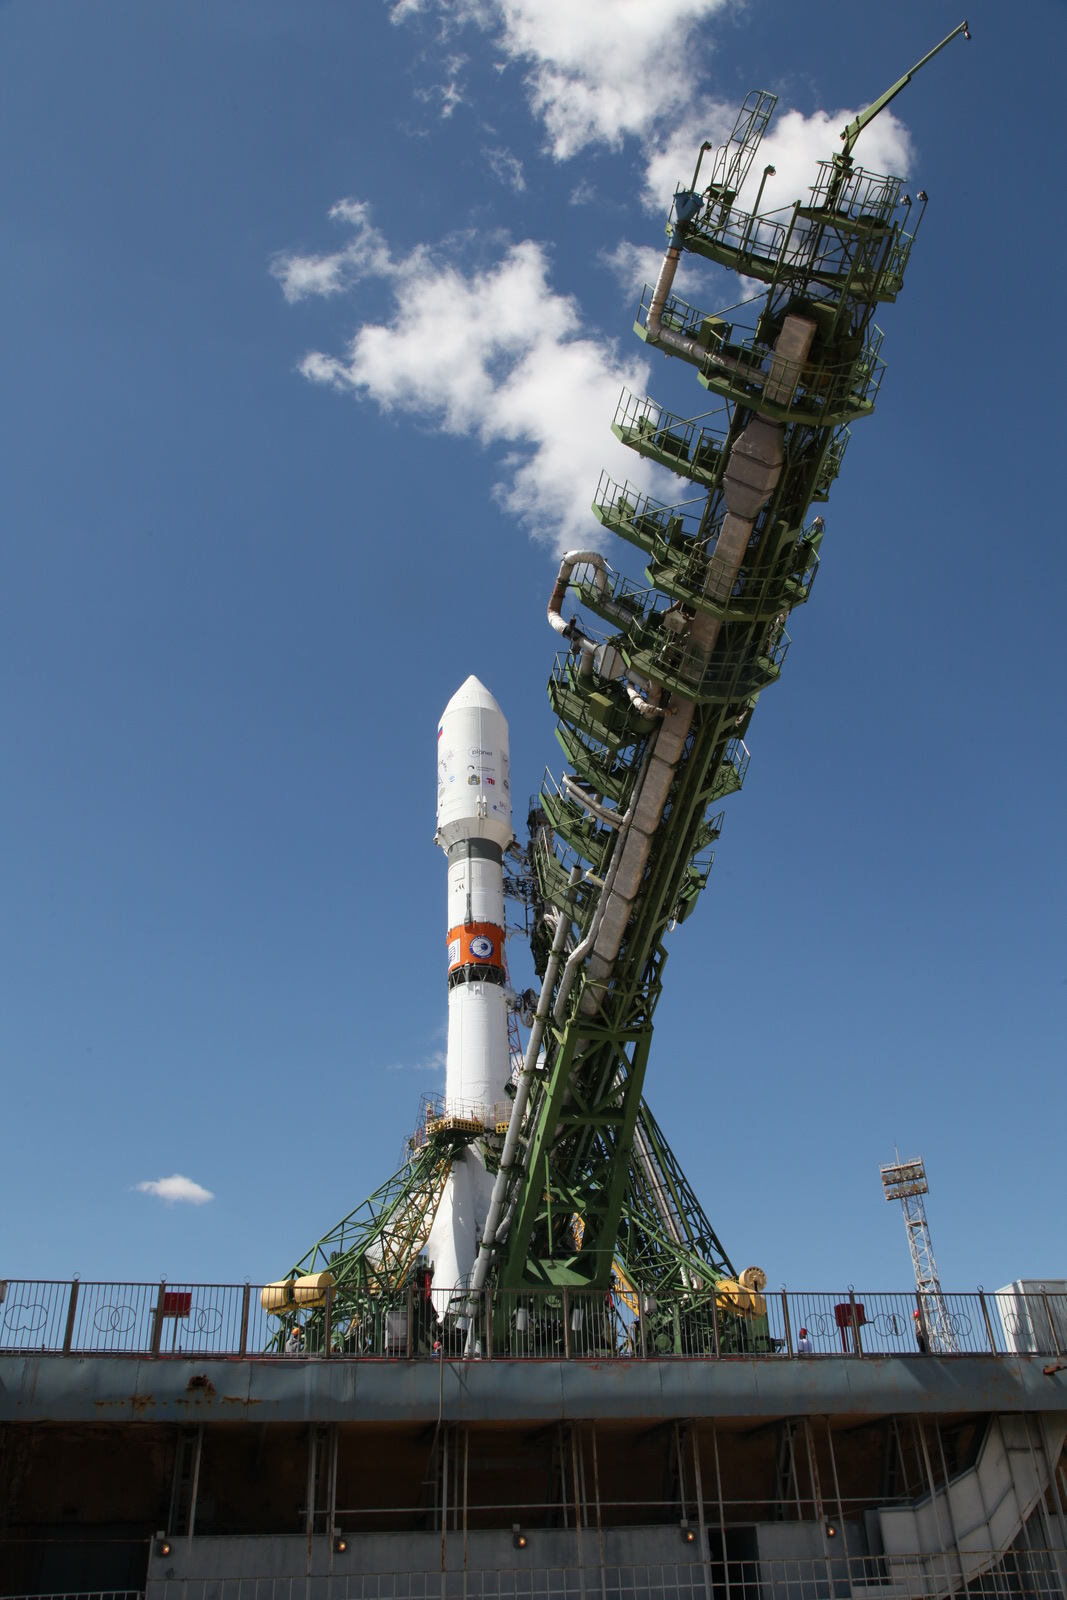 Launch of Soyuz 2.1a launch vehicle with 73 satellites - Space, Union, Rocket, Start, Baikonur, Video, Longpost